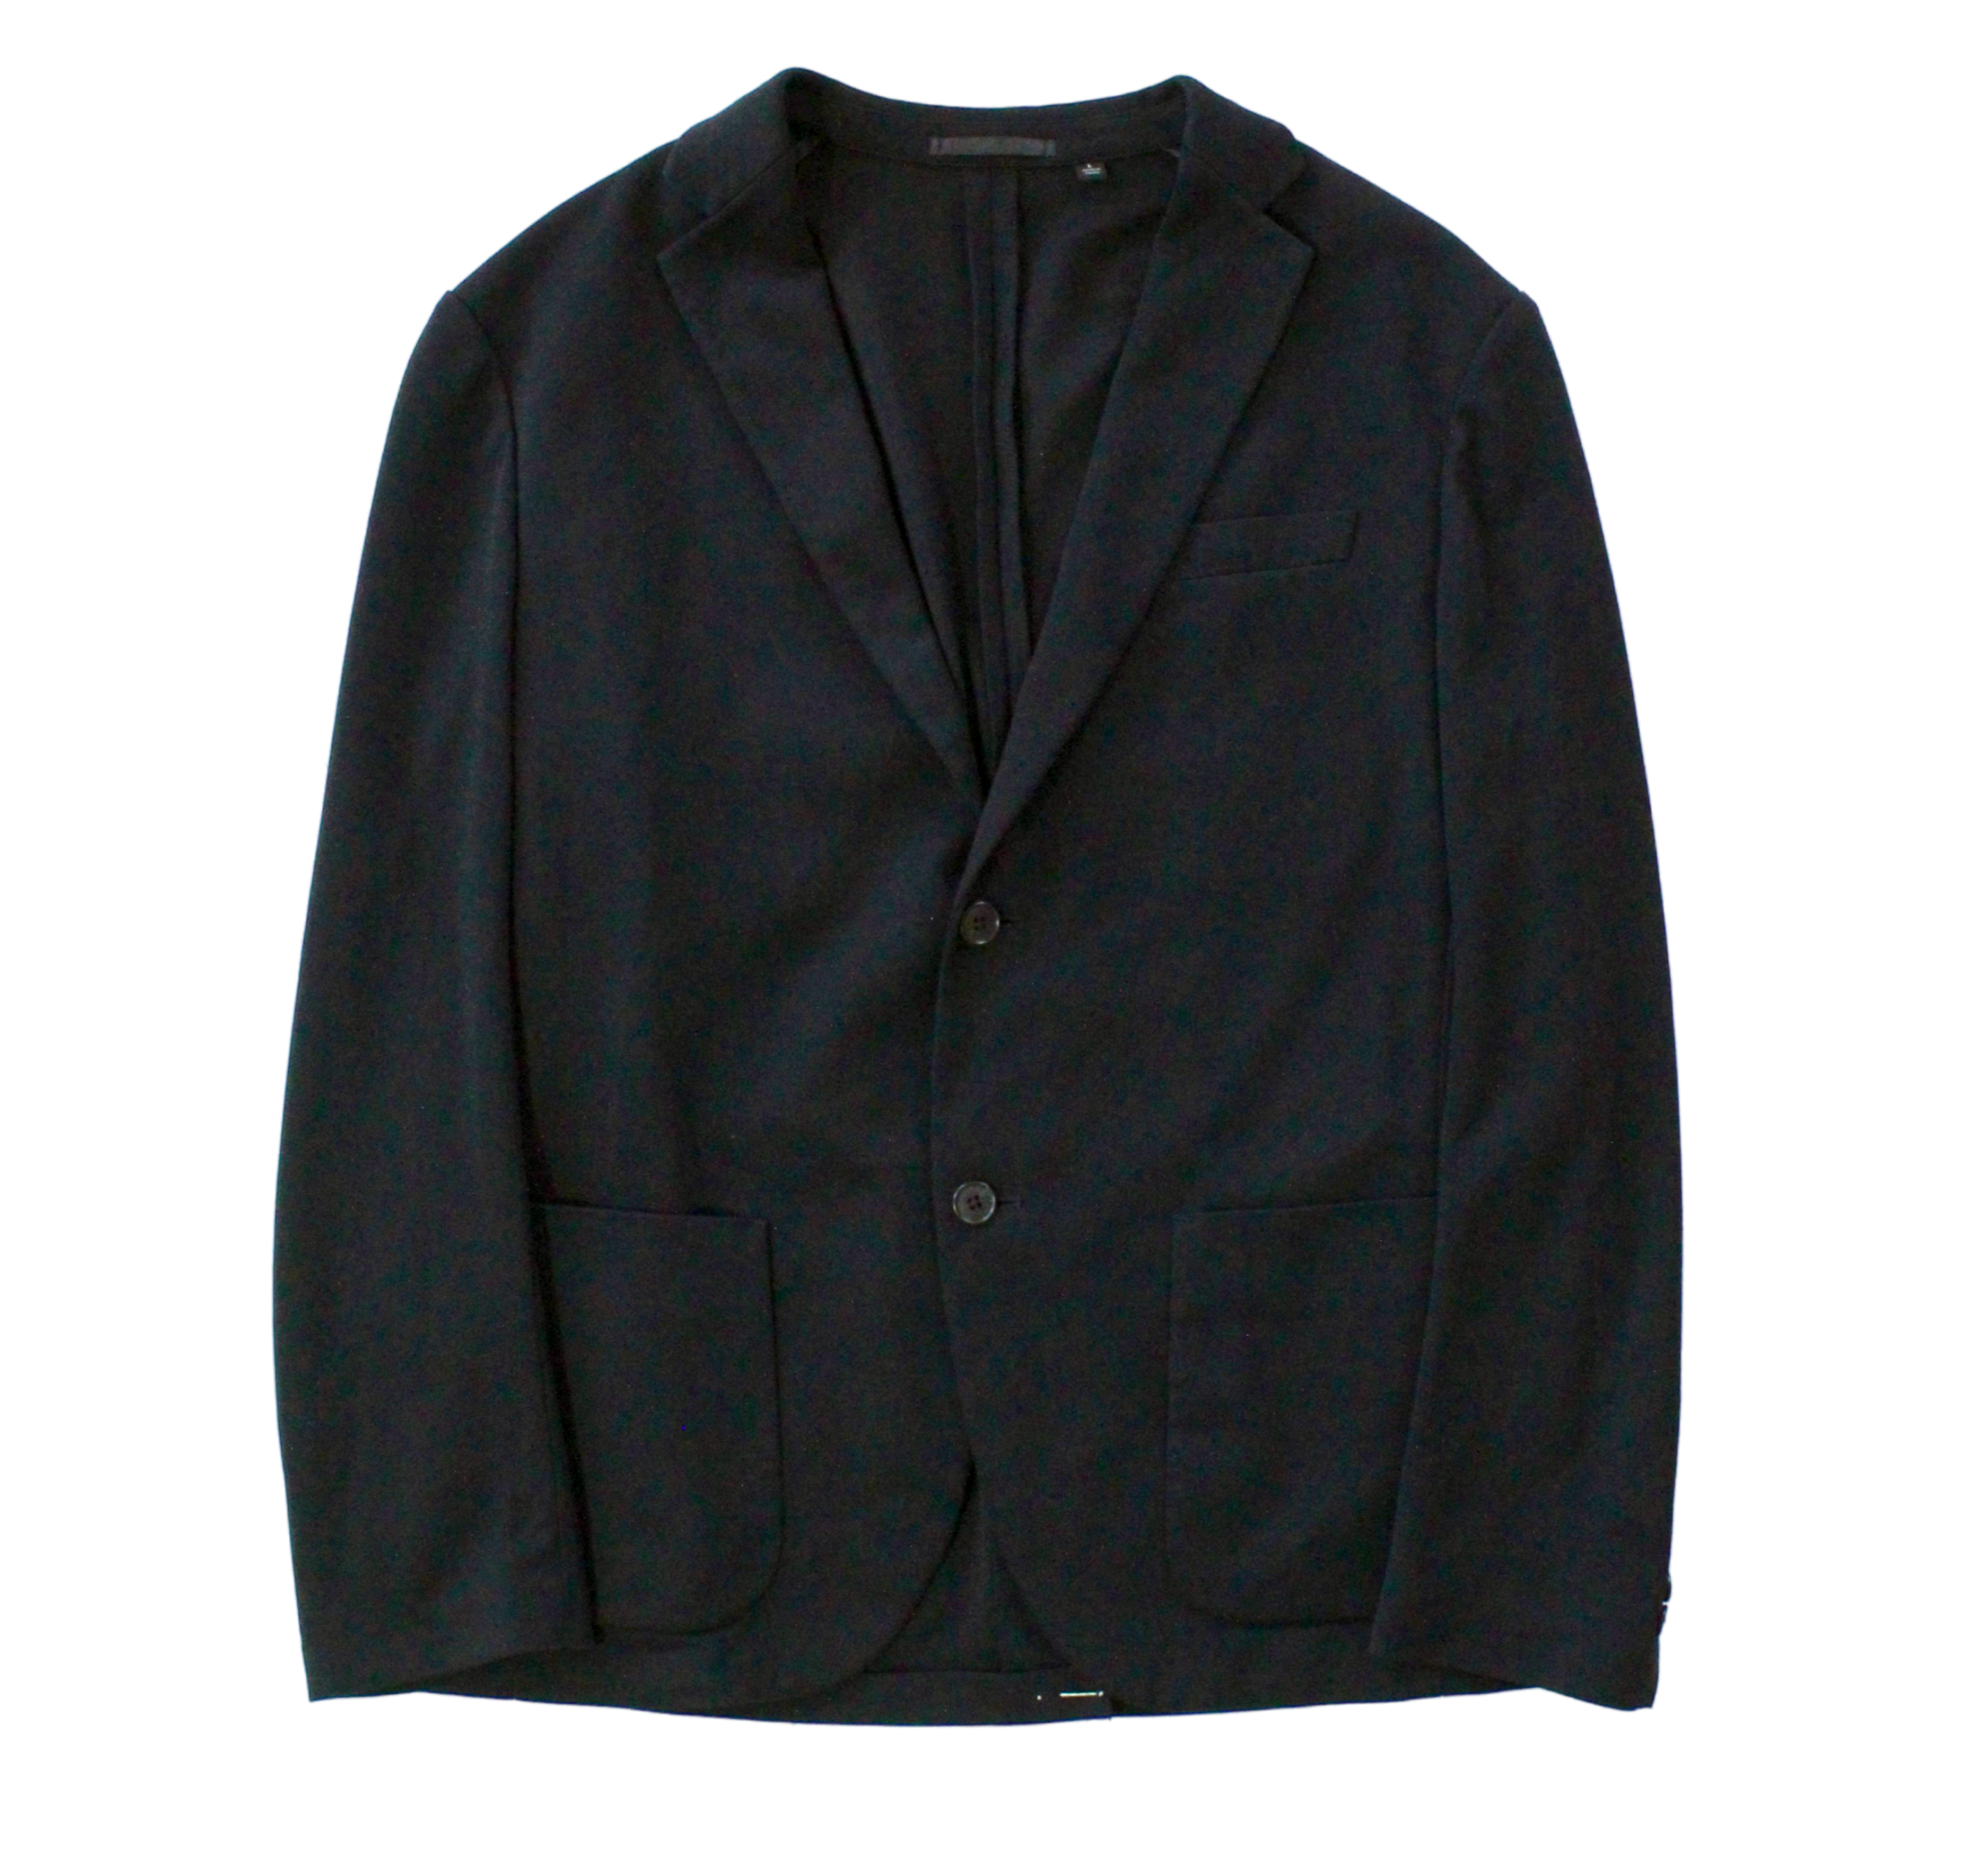 Gavin Bennett's Suit Jacket